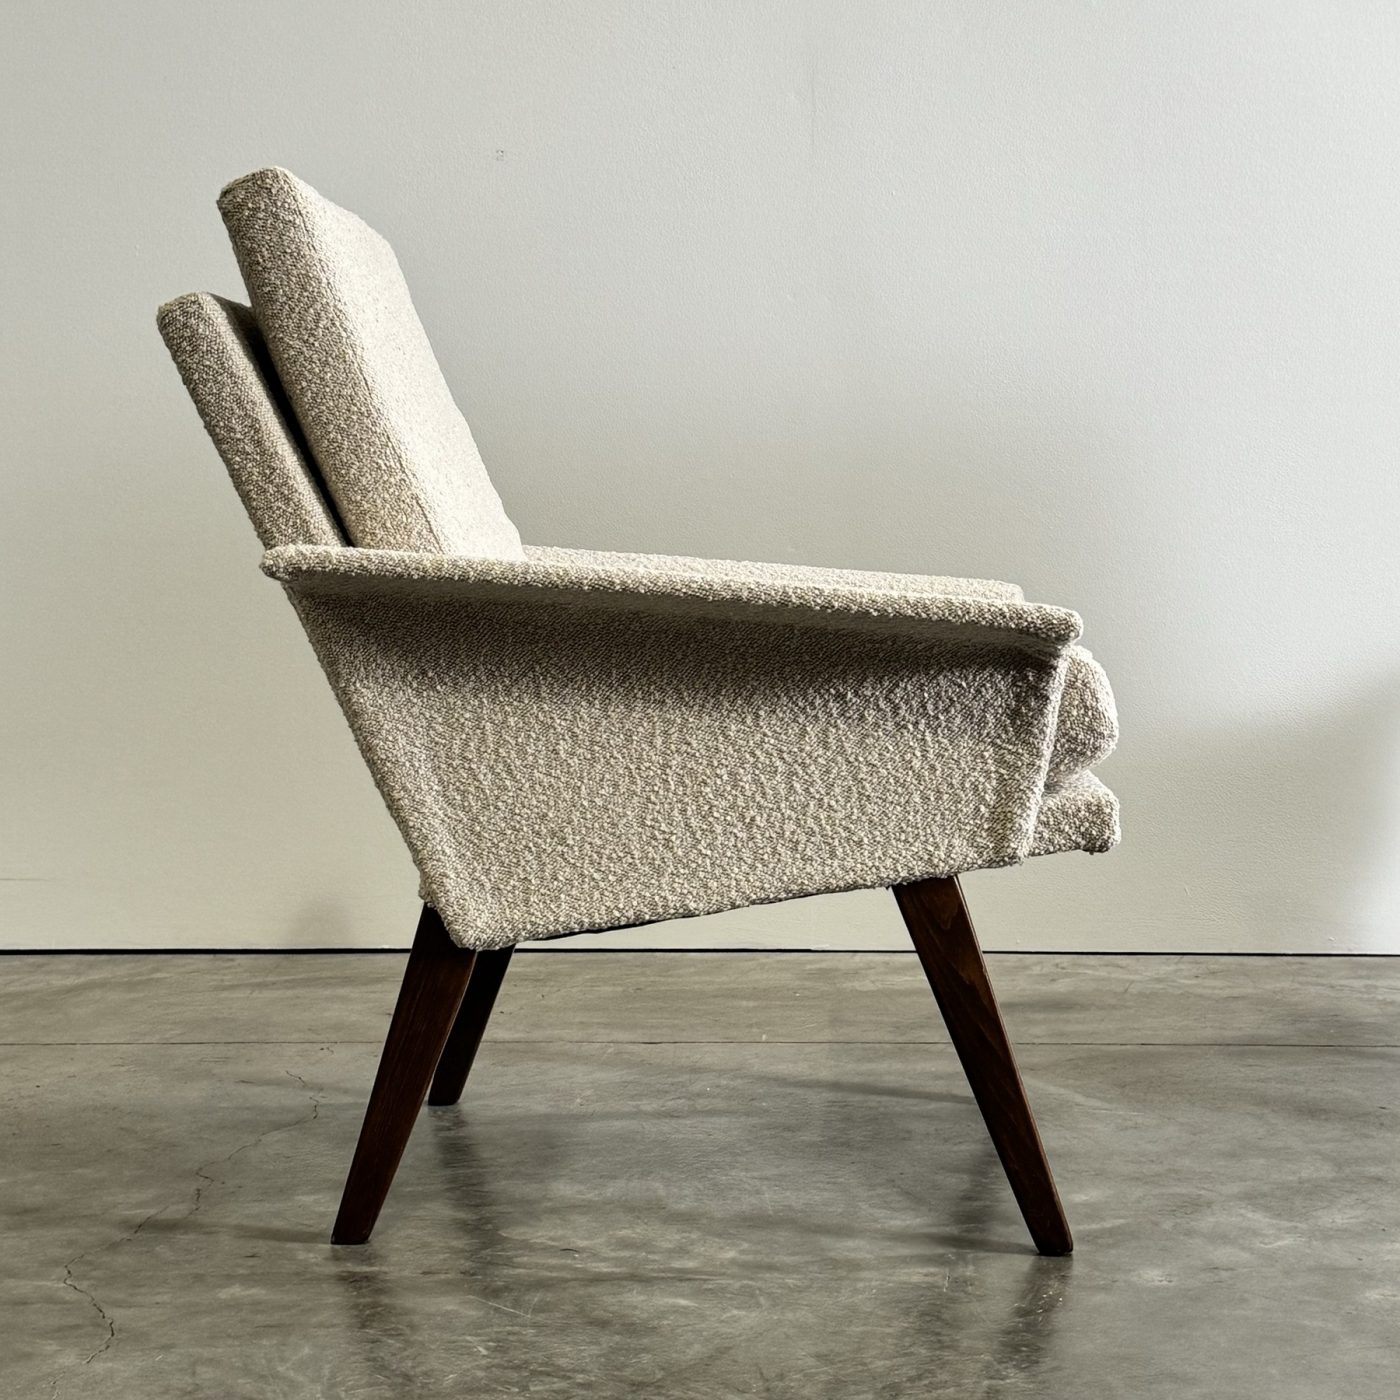 objet-vagabond-vintage-armchairs20000